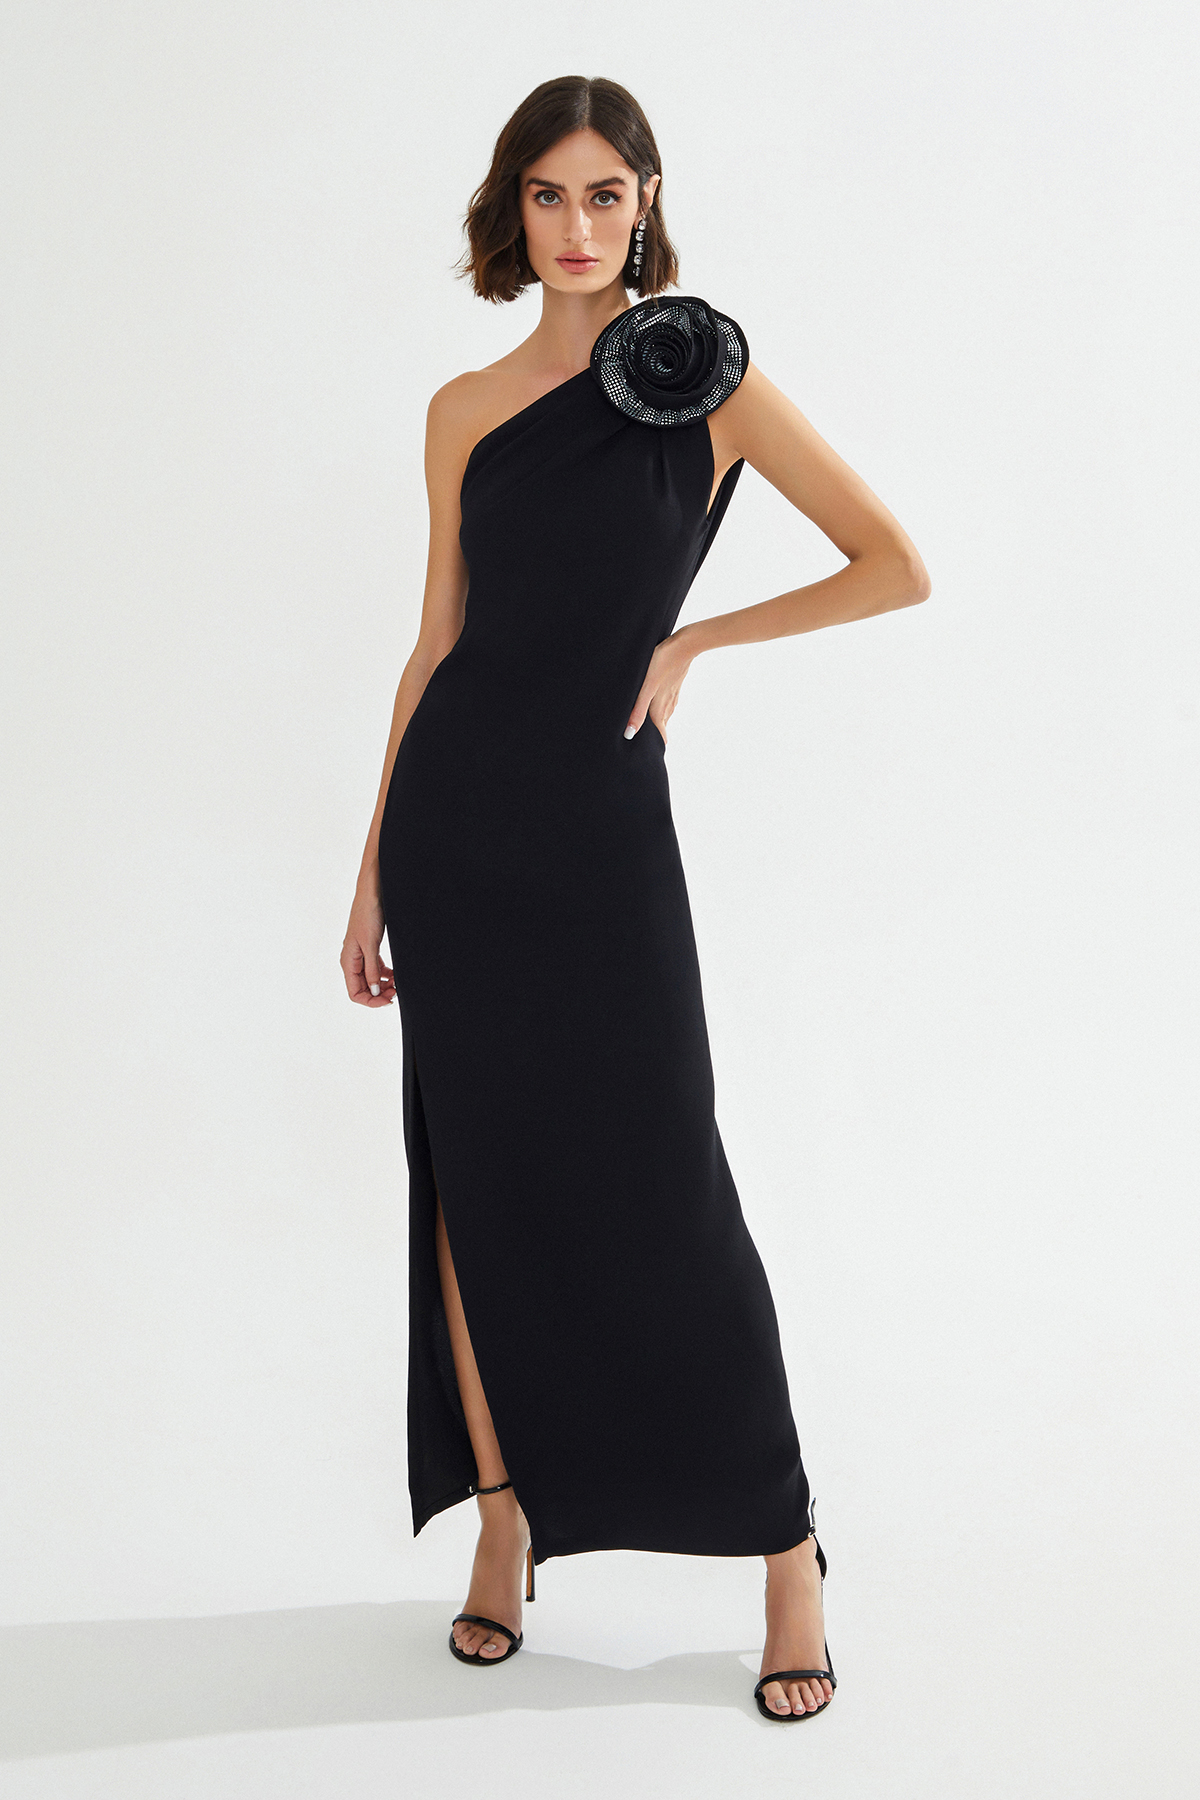 GENNIE One Shoulder Black Maxi Dress